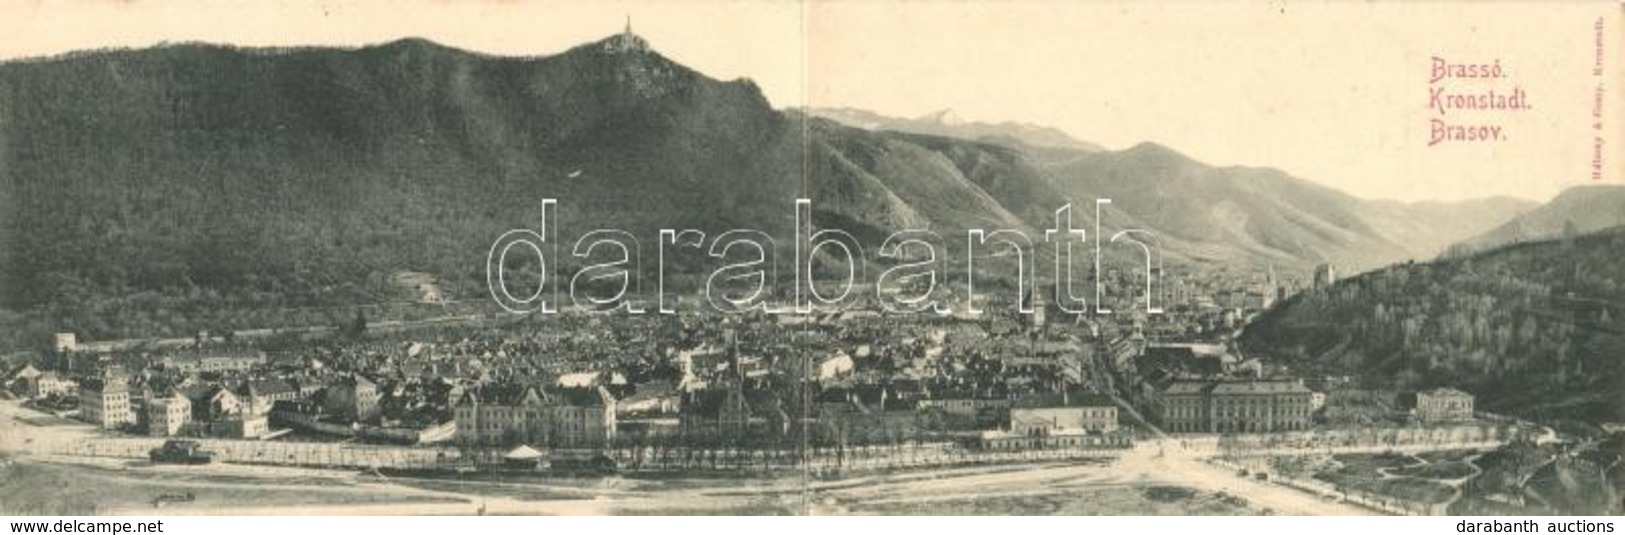 T2 1899 Brassó, Kronstadt, Brasov; Panorámalap / Panoramacard - Unclassified